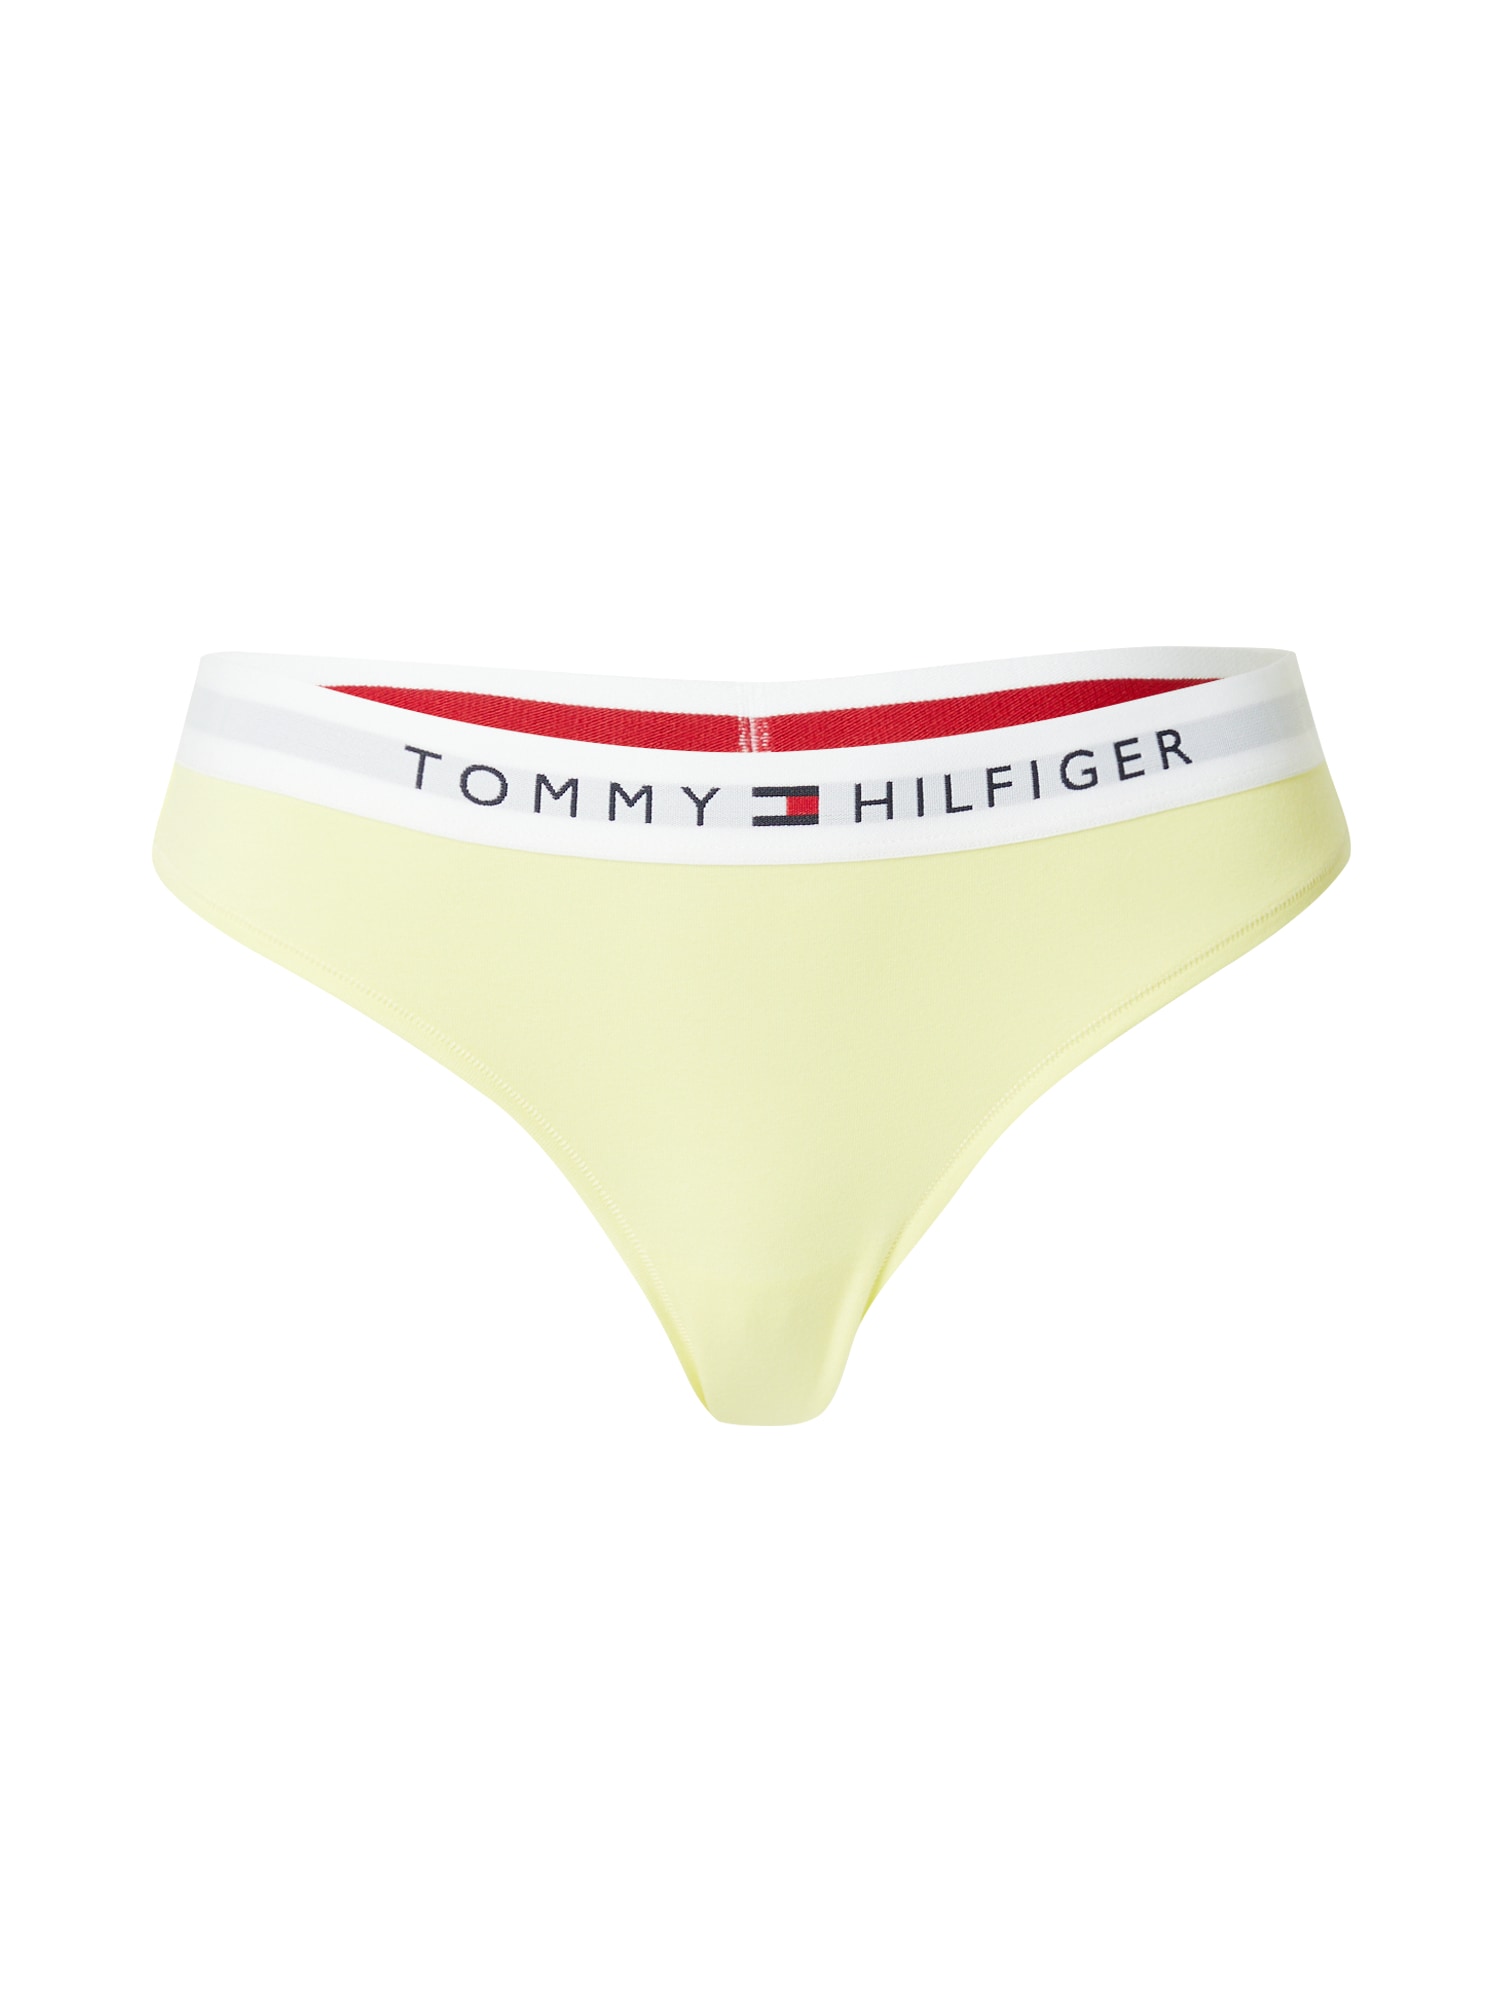 Tommy Hilfiger Underwear Tangá  žltá / červená / čierna